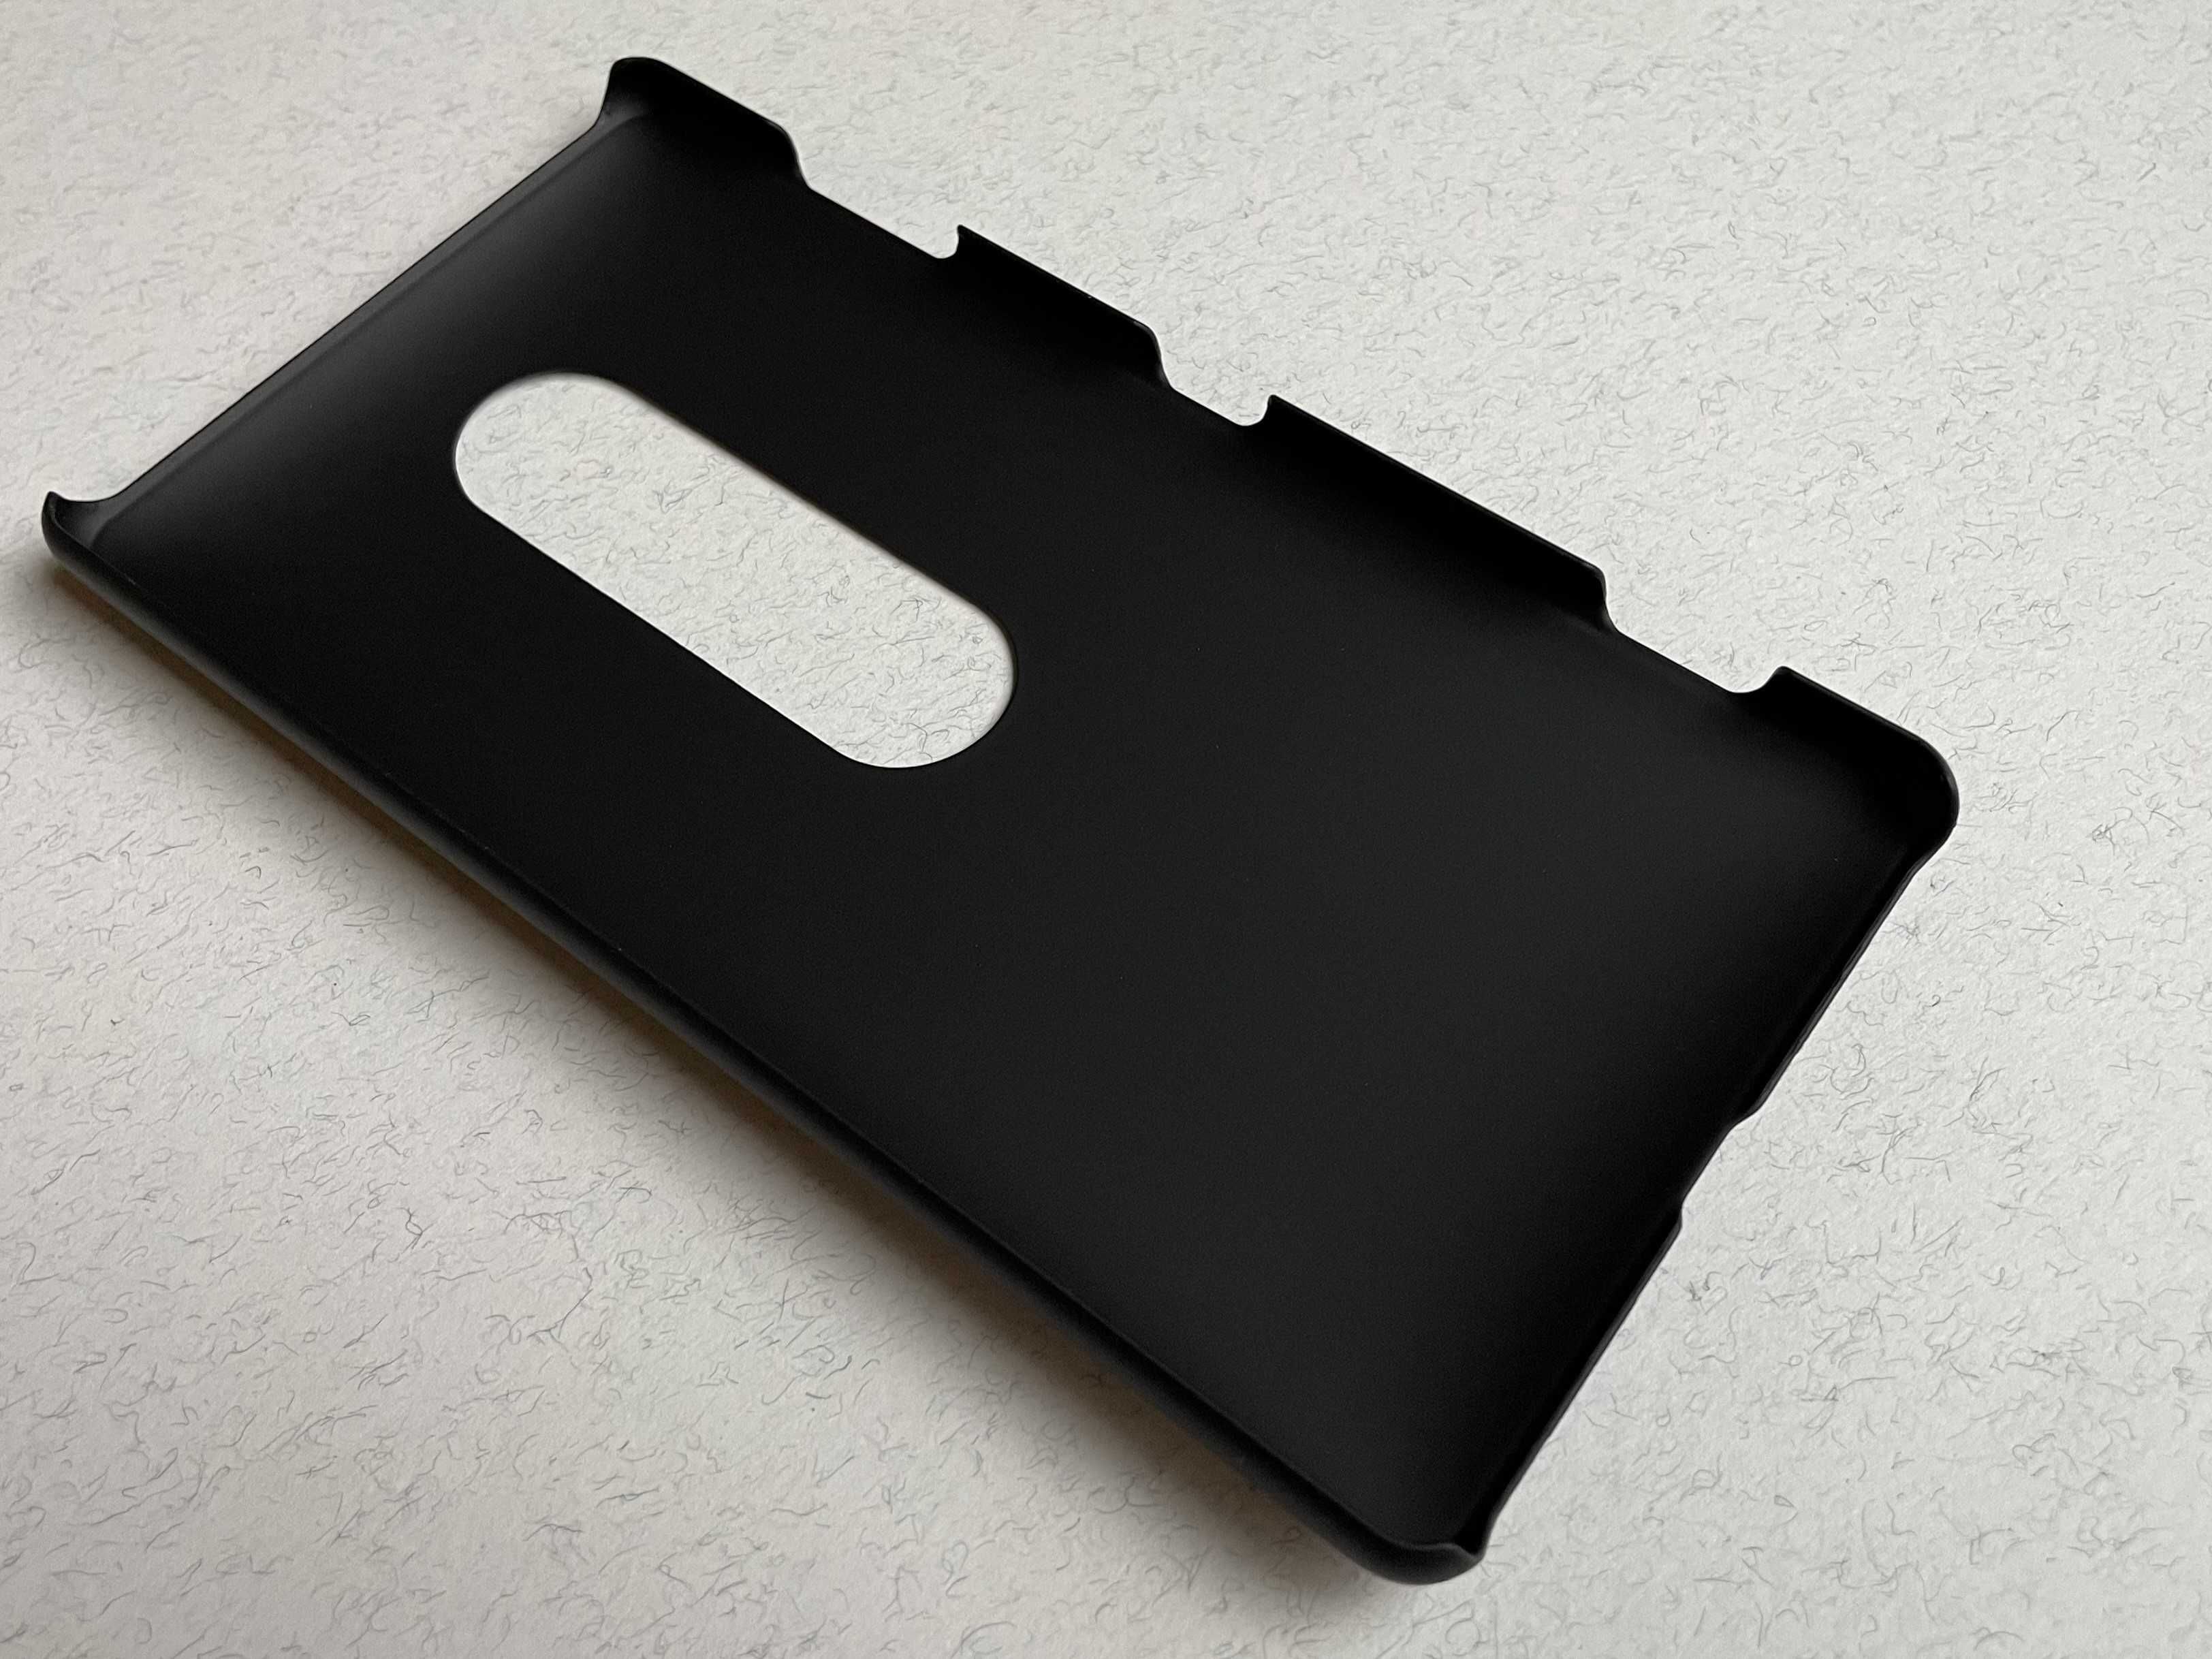 Sony Xperia XZ2 Premium чохол чорний матовий пластиковий тонкий чехол